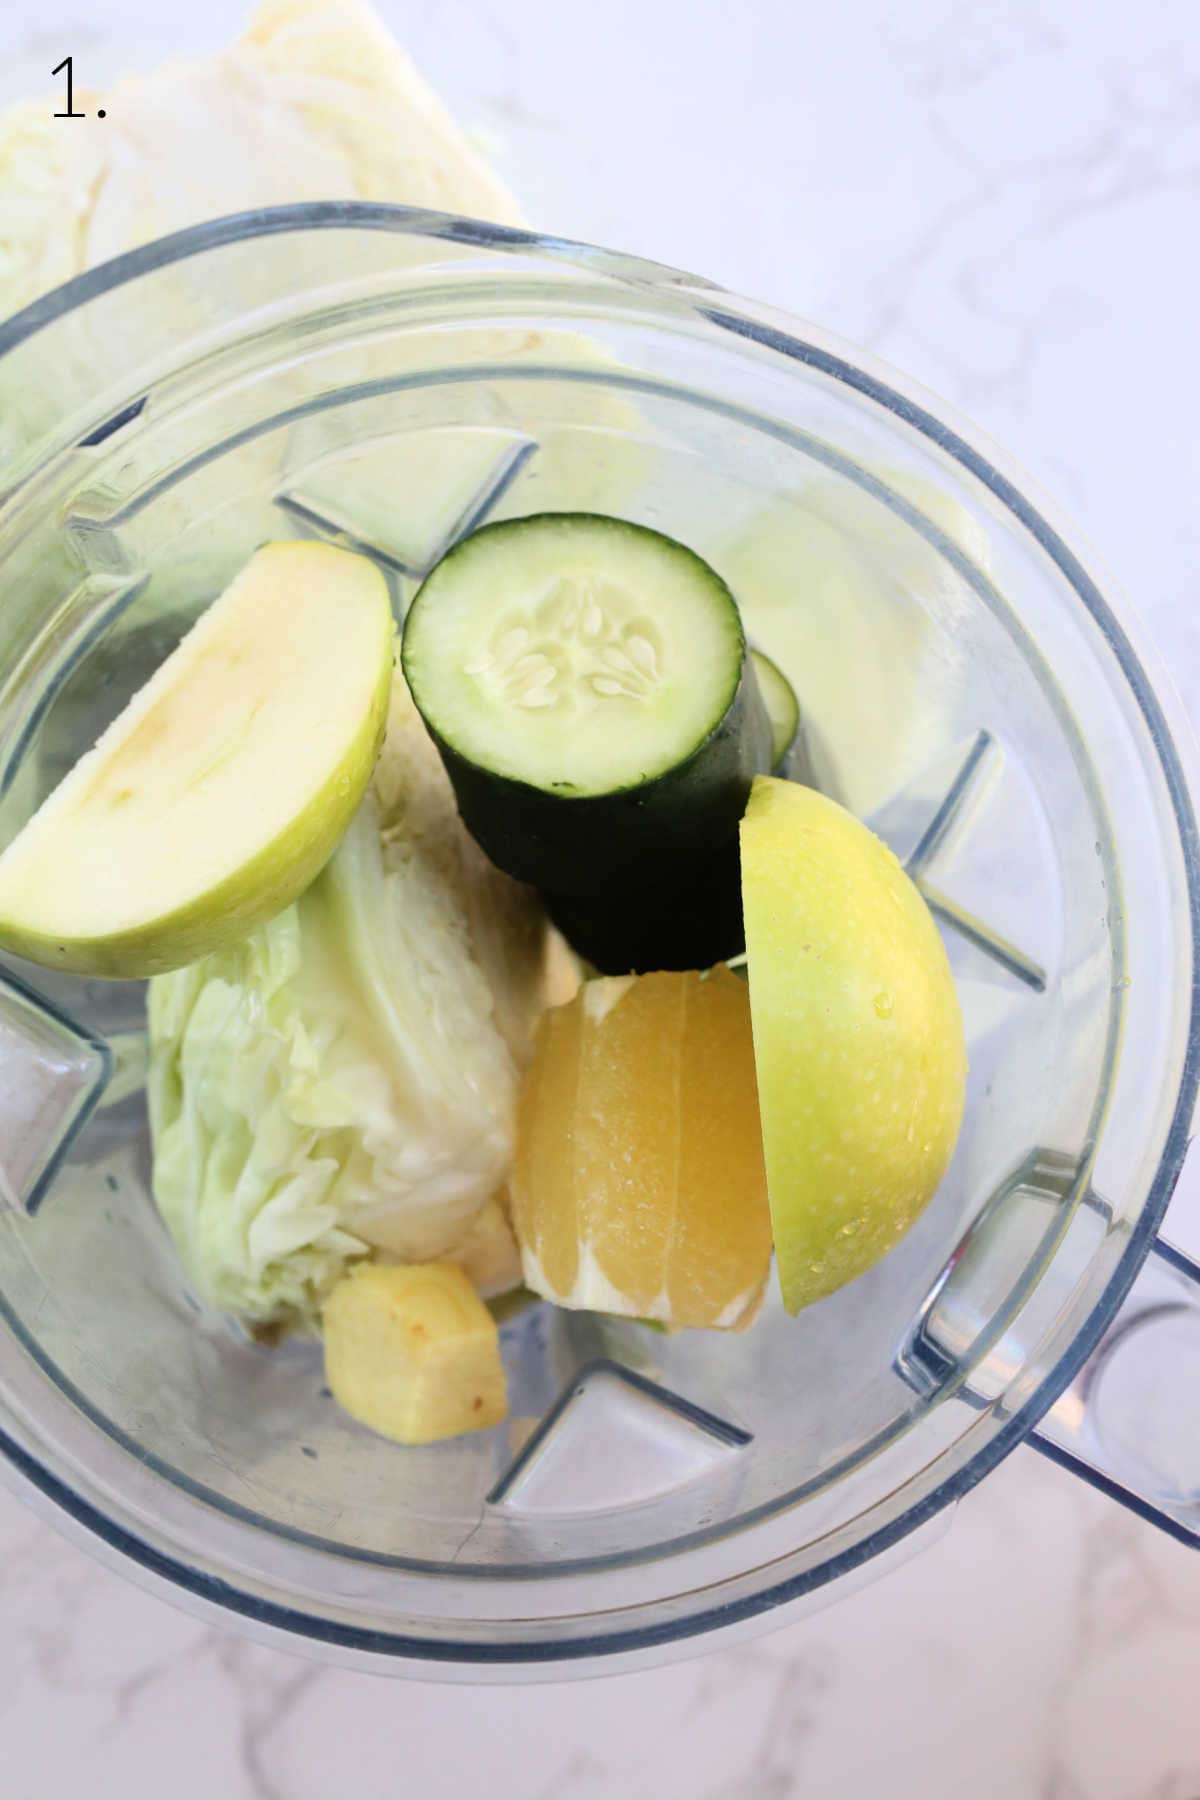 Cabbage juice ingredients in a blender.